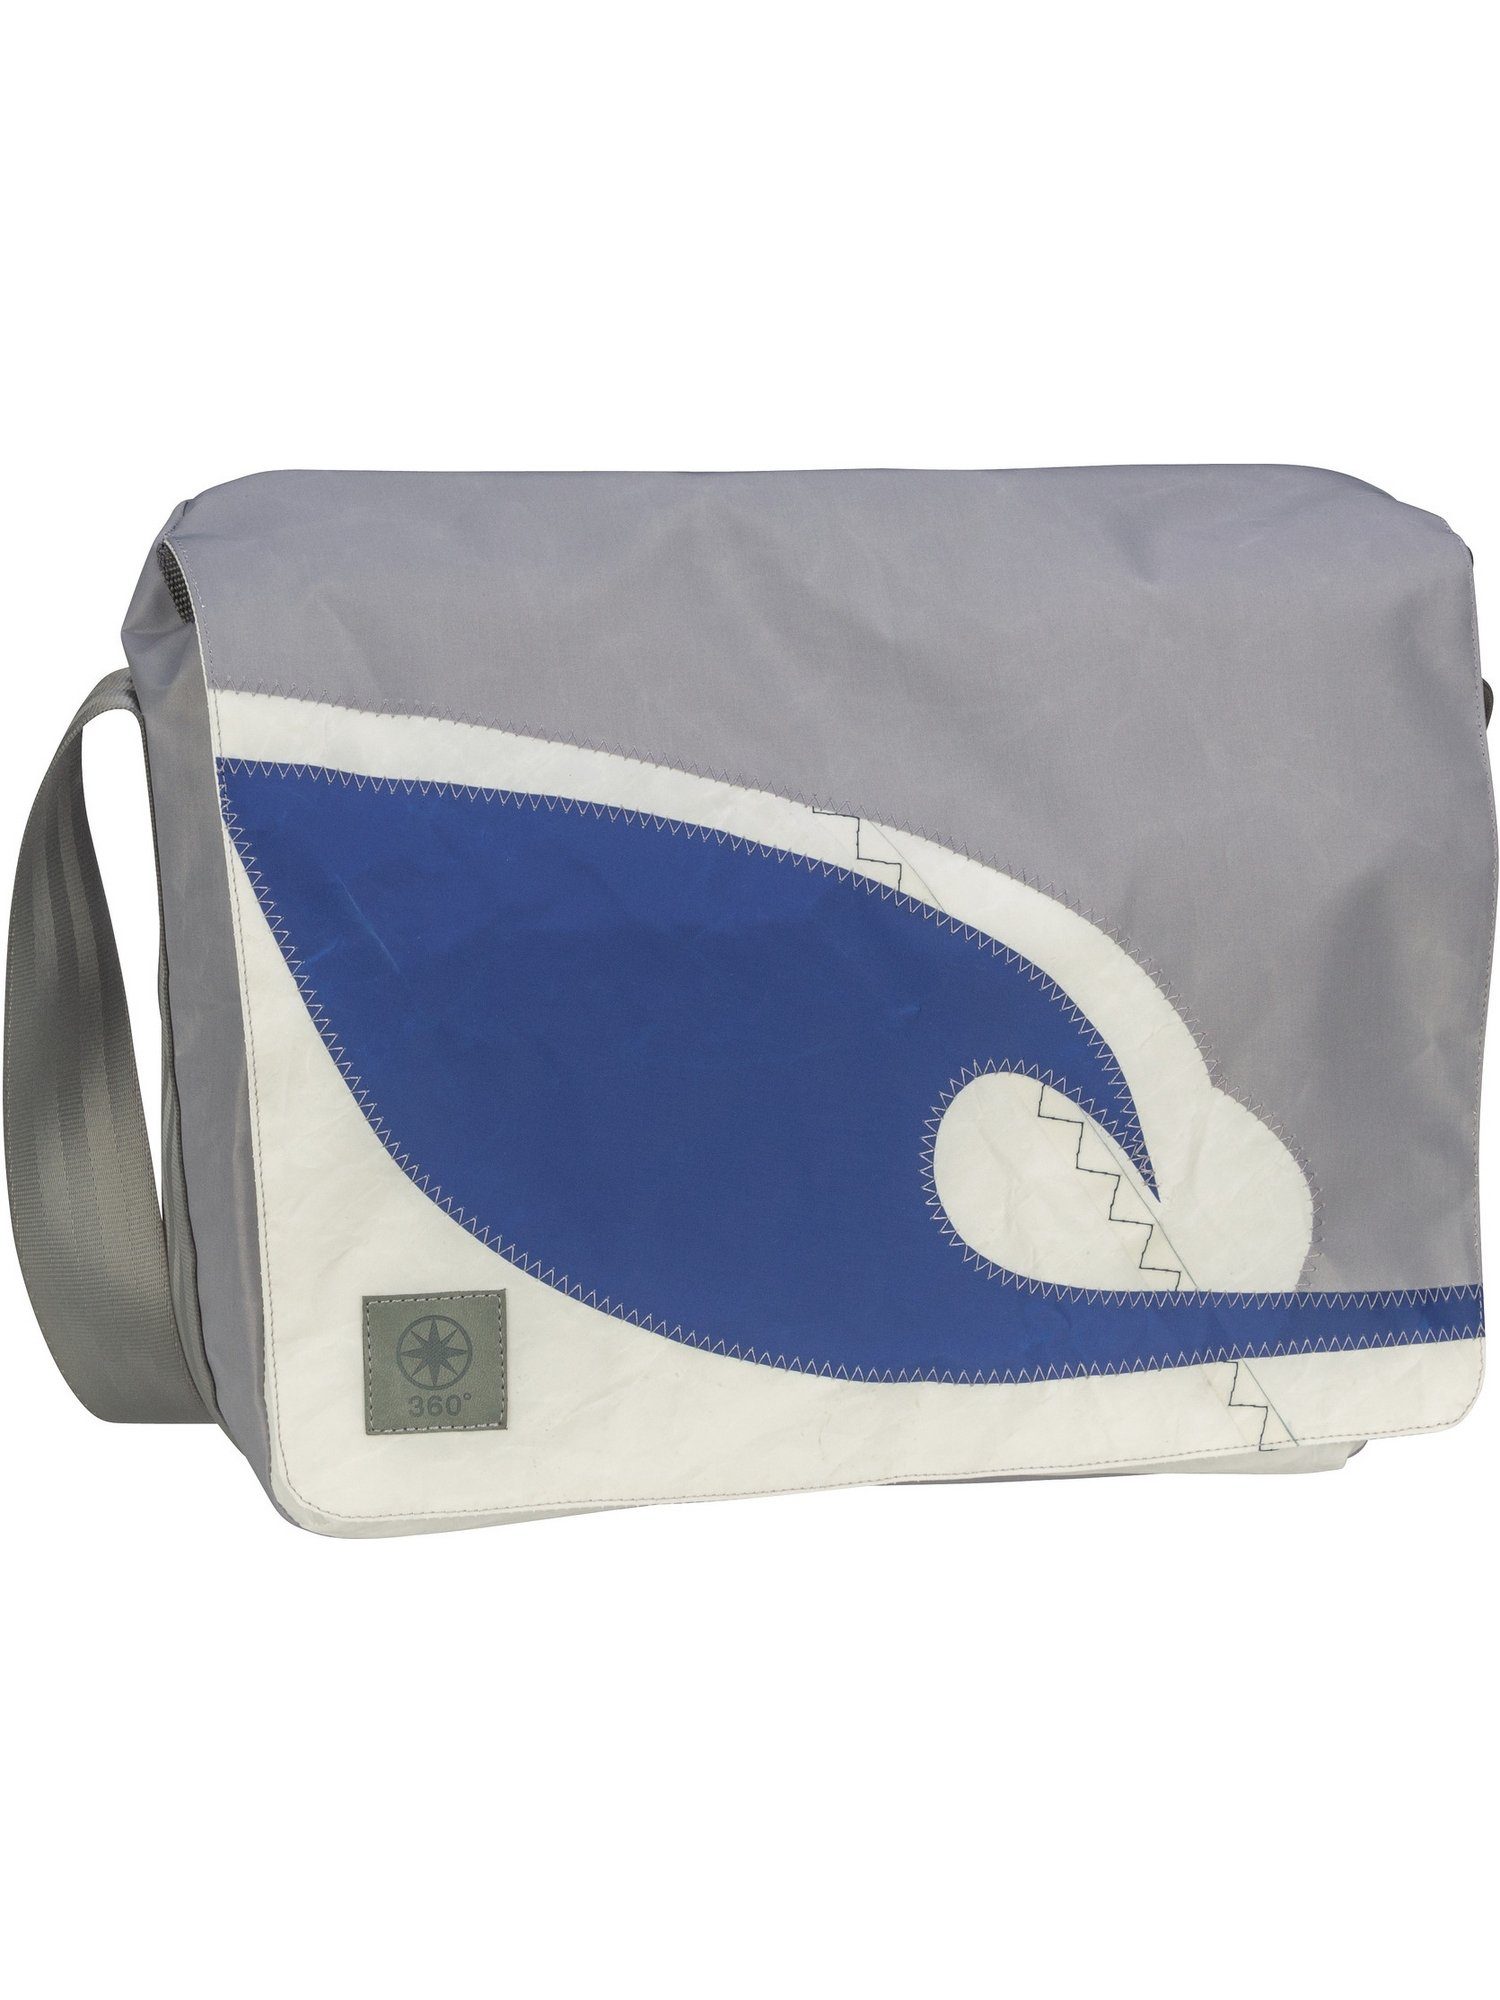 360Grad Umhängetasche Barkasse, Messenger Bag Weiß/Grau Blau